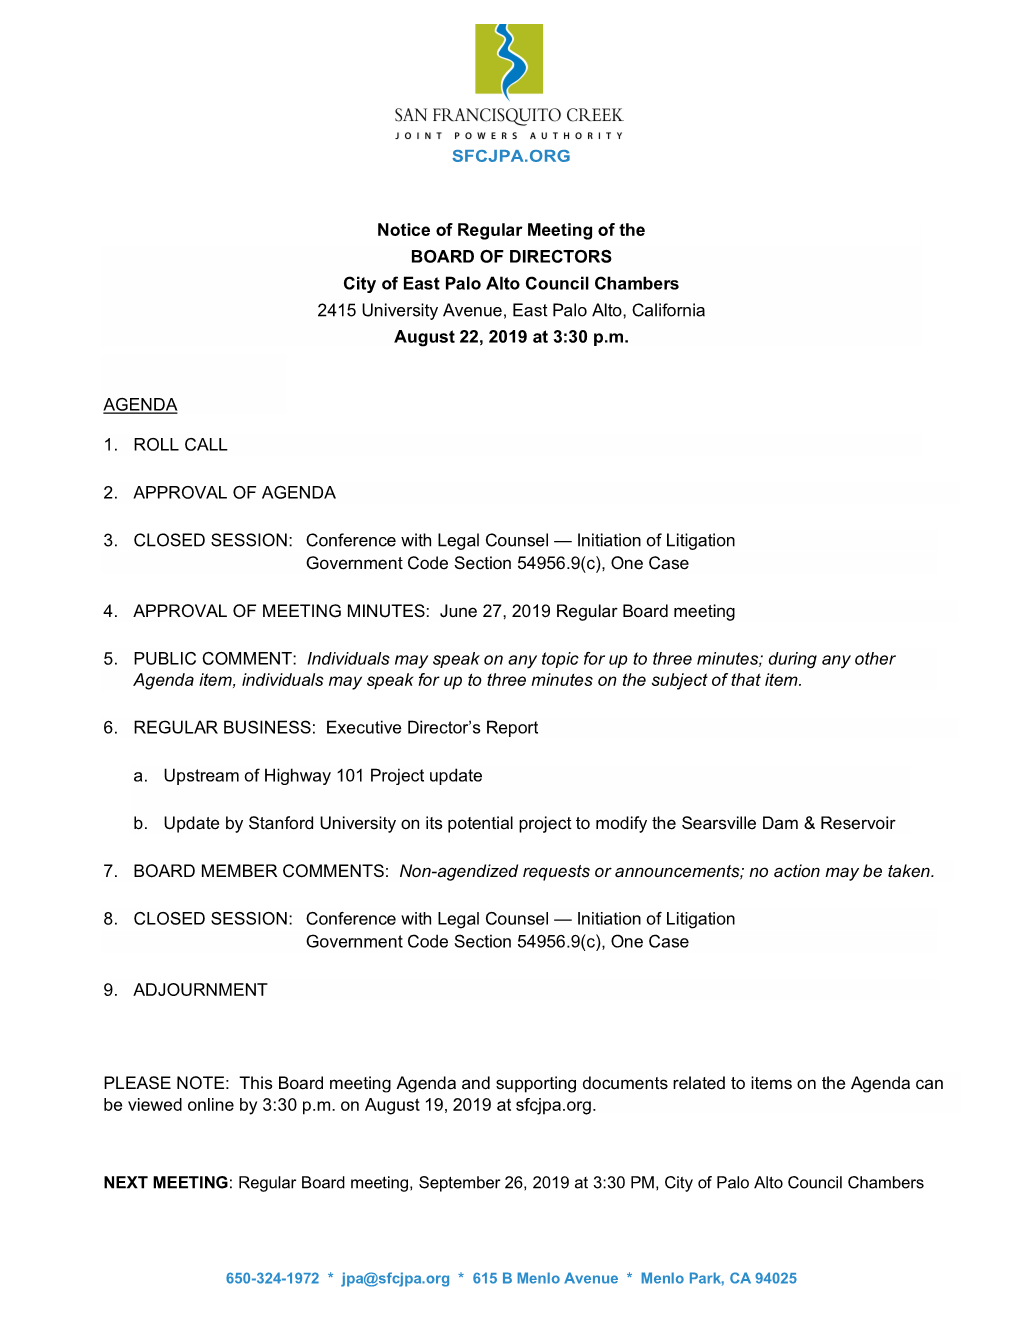 SFCJPA.ORG Notice of Regular Meeting of the BOARD OF